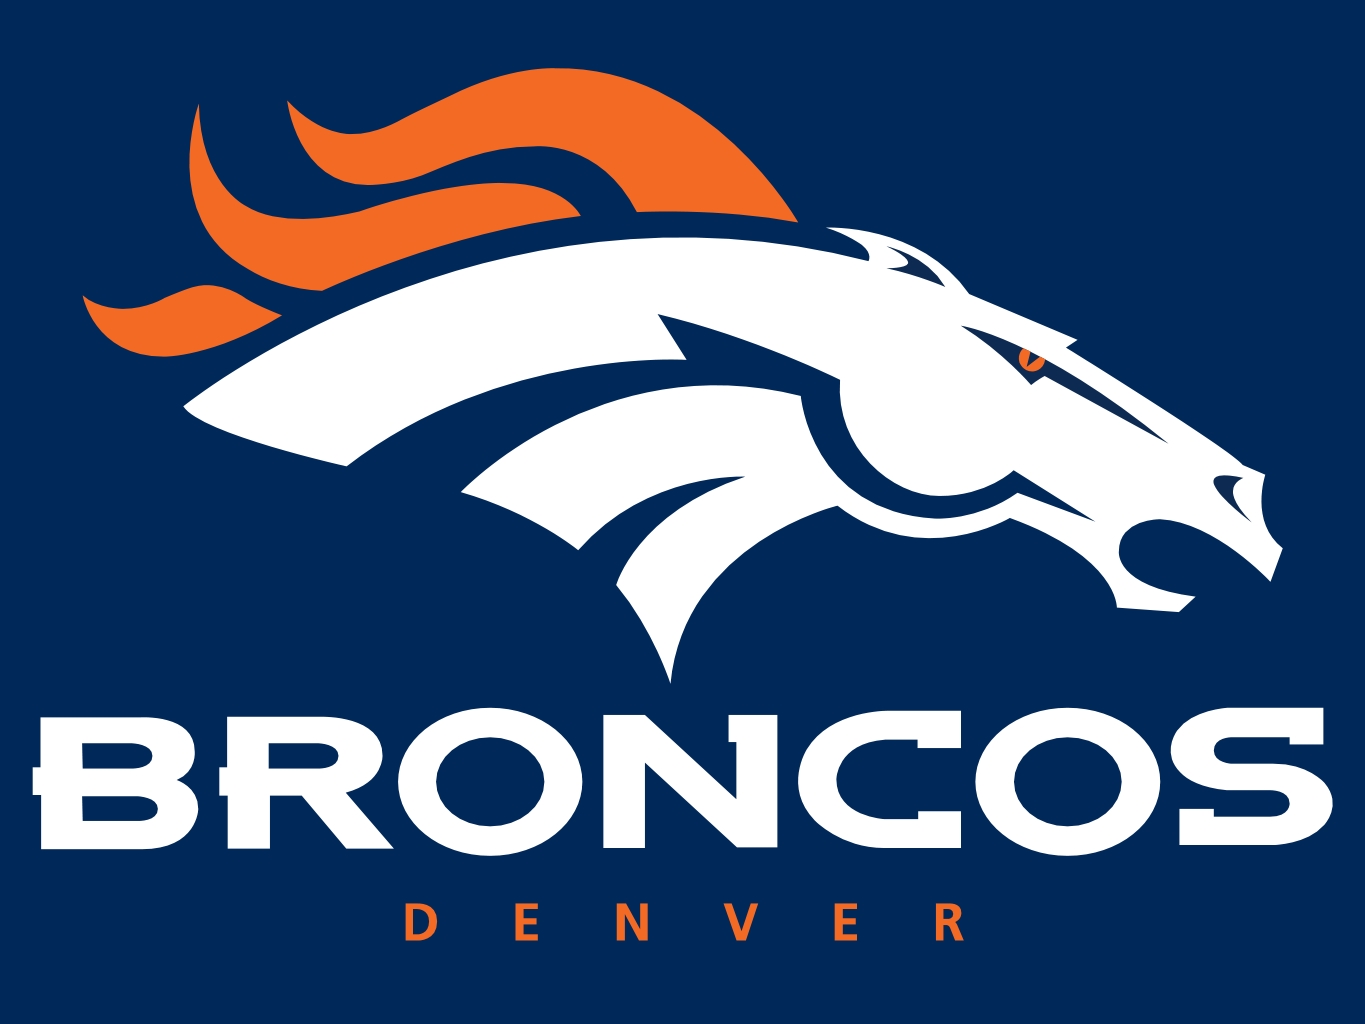 NFL Logos Denver Broncos Wallpaper Wallpaper Sport 74400 high 1365x1024